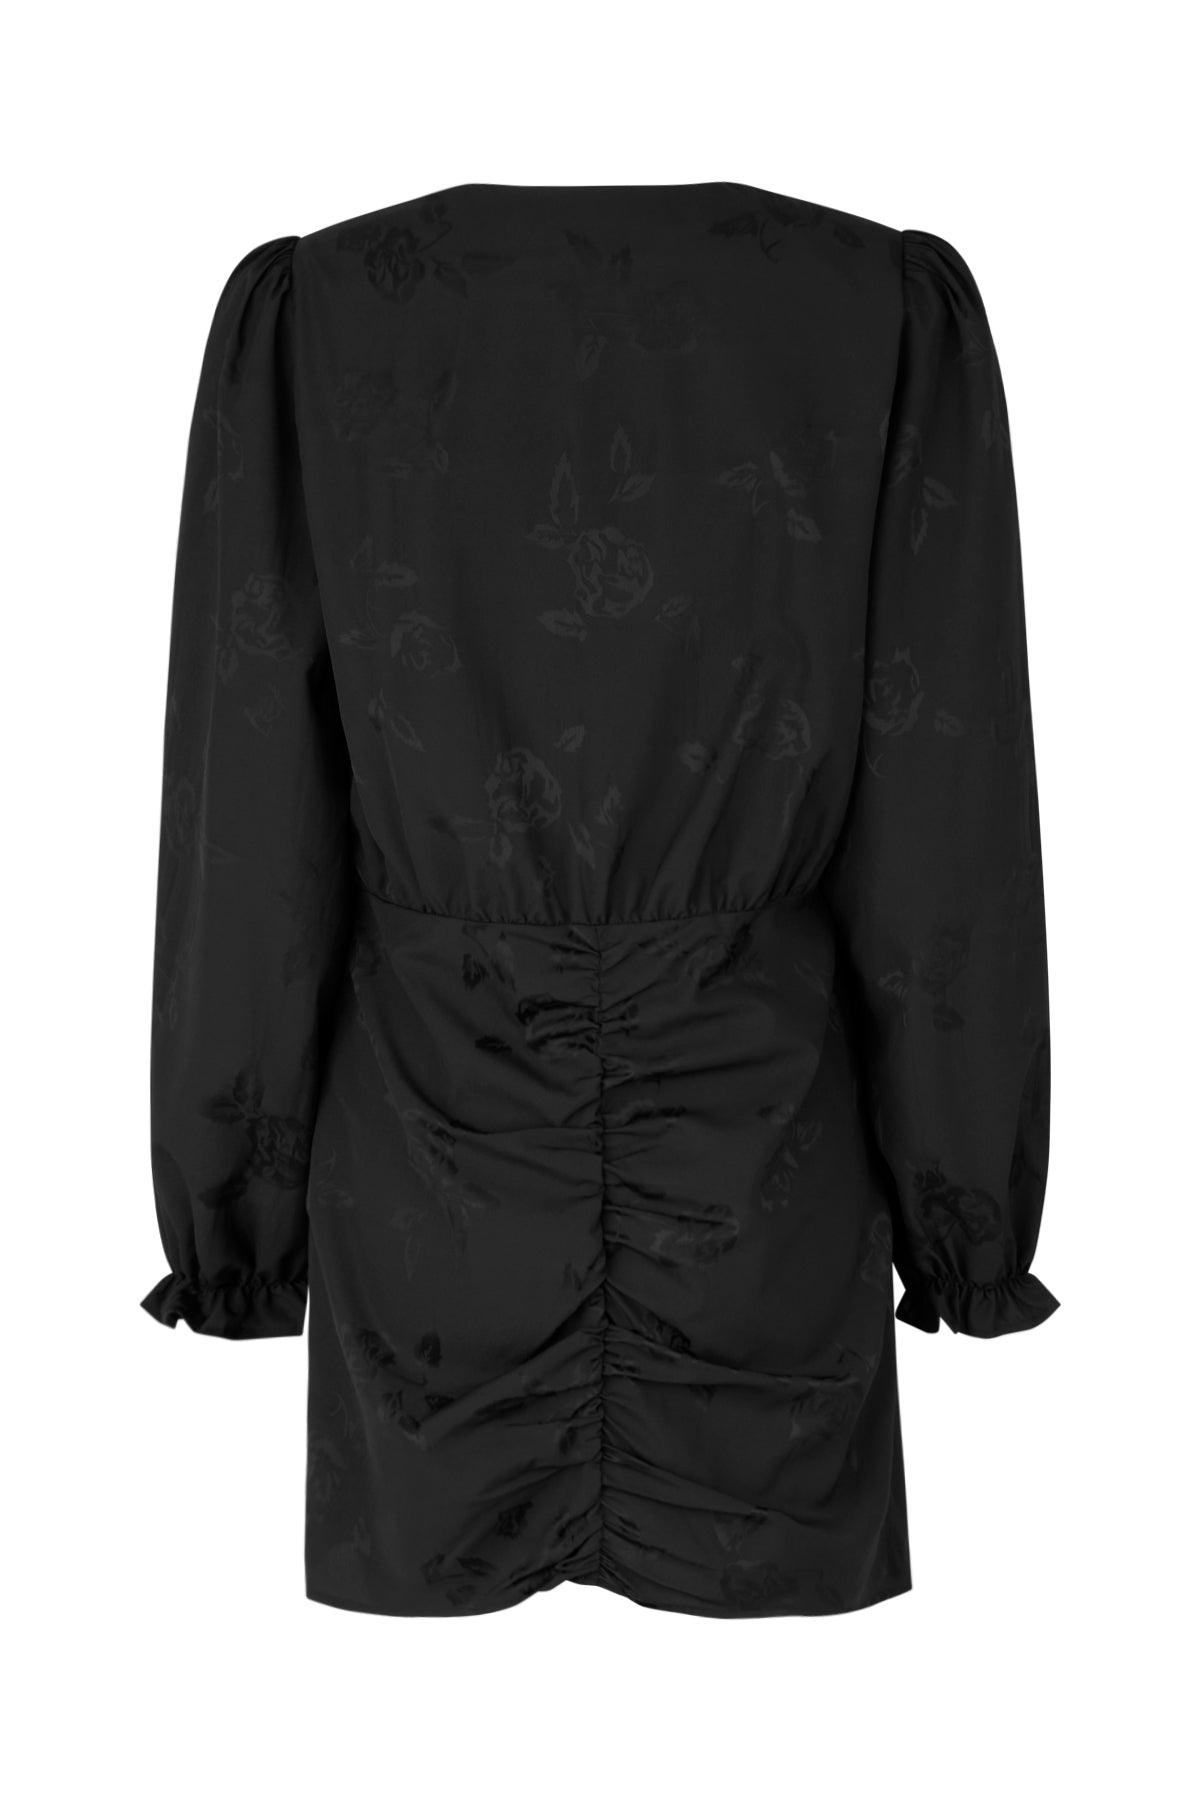 Cras - Jada Dress Black - No22 Damplassen